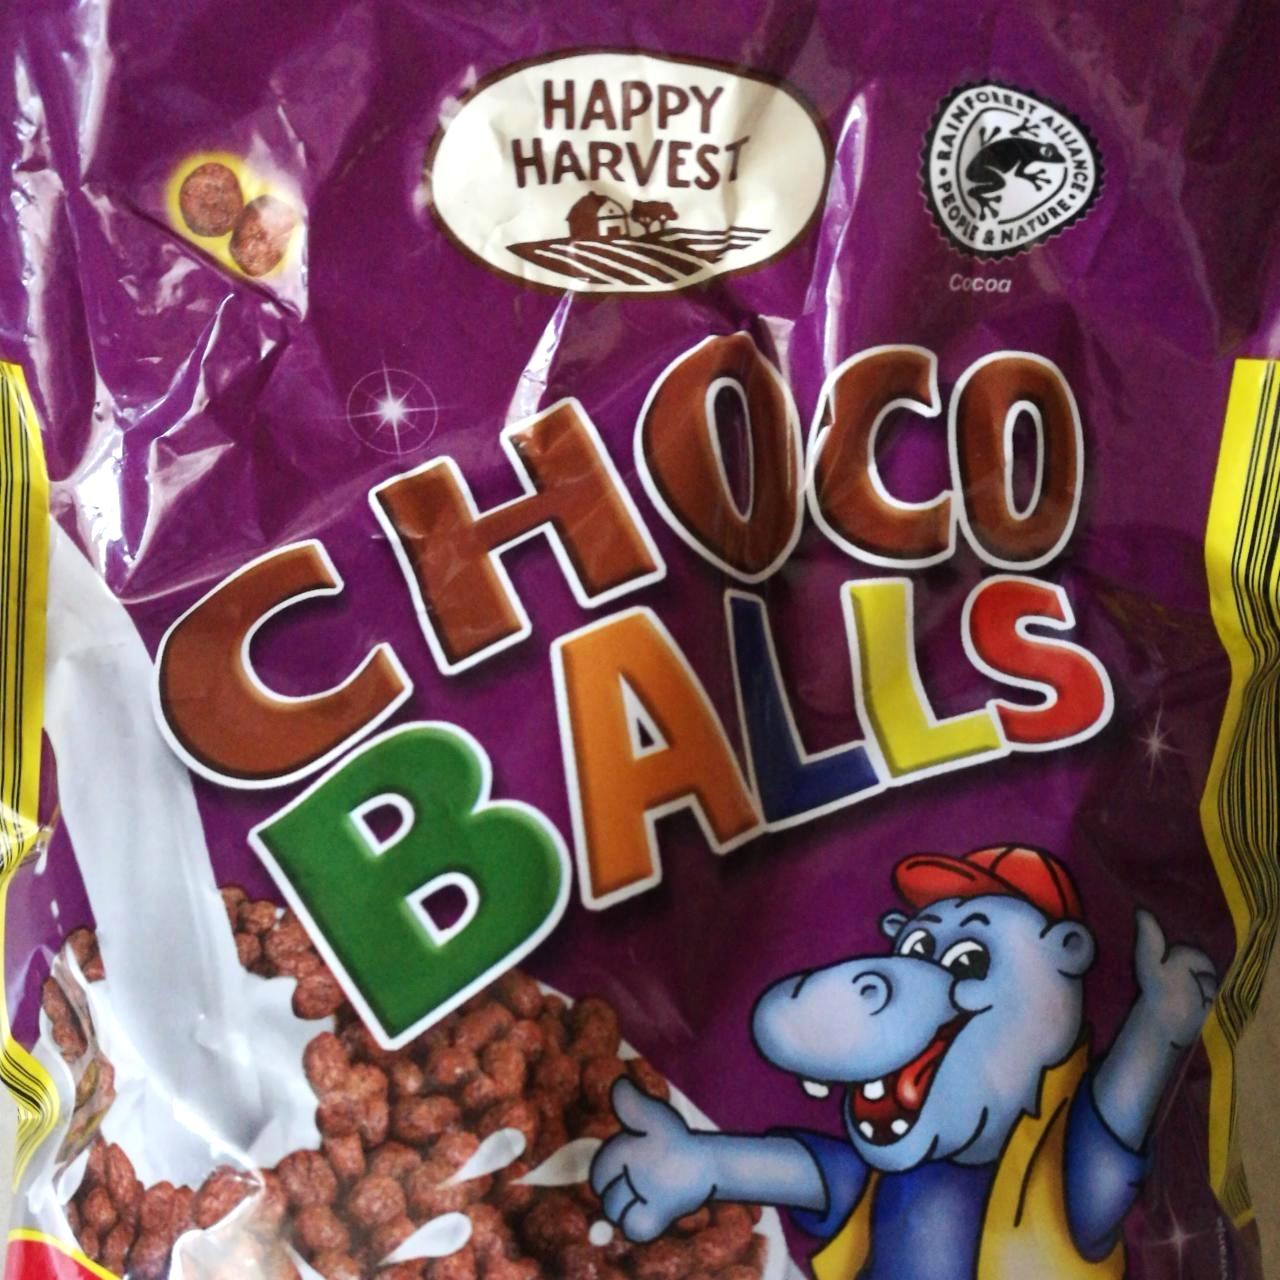 Képek - Choco balls Happy Harvest